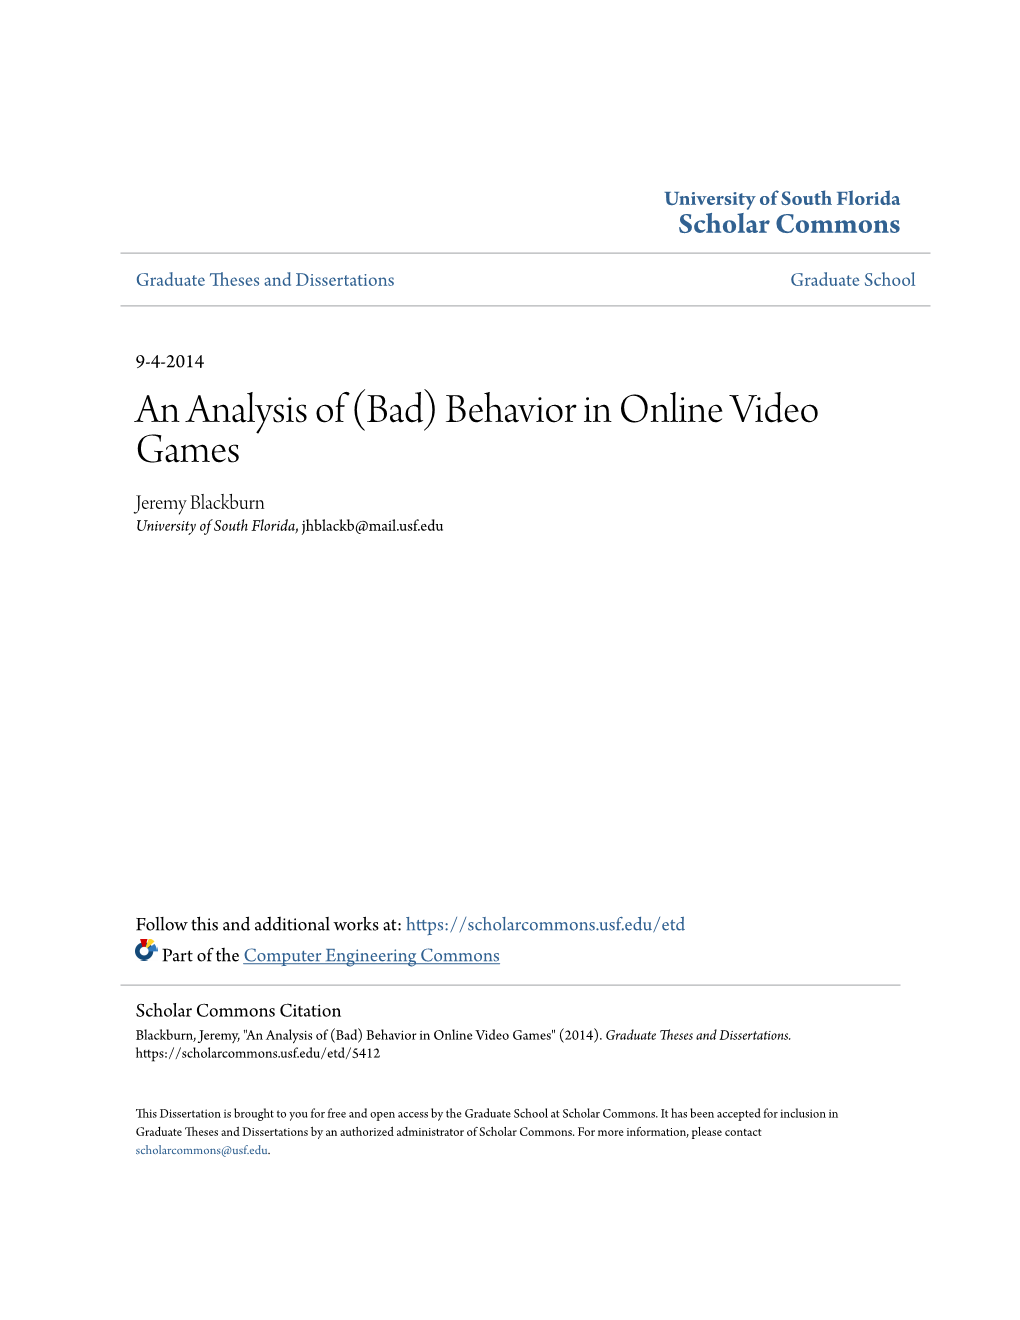 An Analysis of (Bad) Behavior in Online Video Games Jeremy Blackburn University of South Florida, Jhblackb@Mail.Usf.Edu